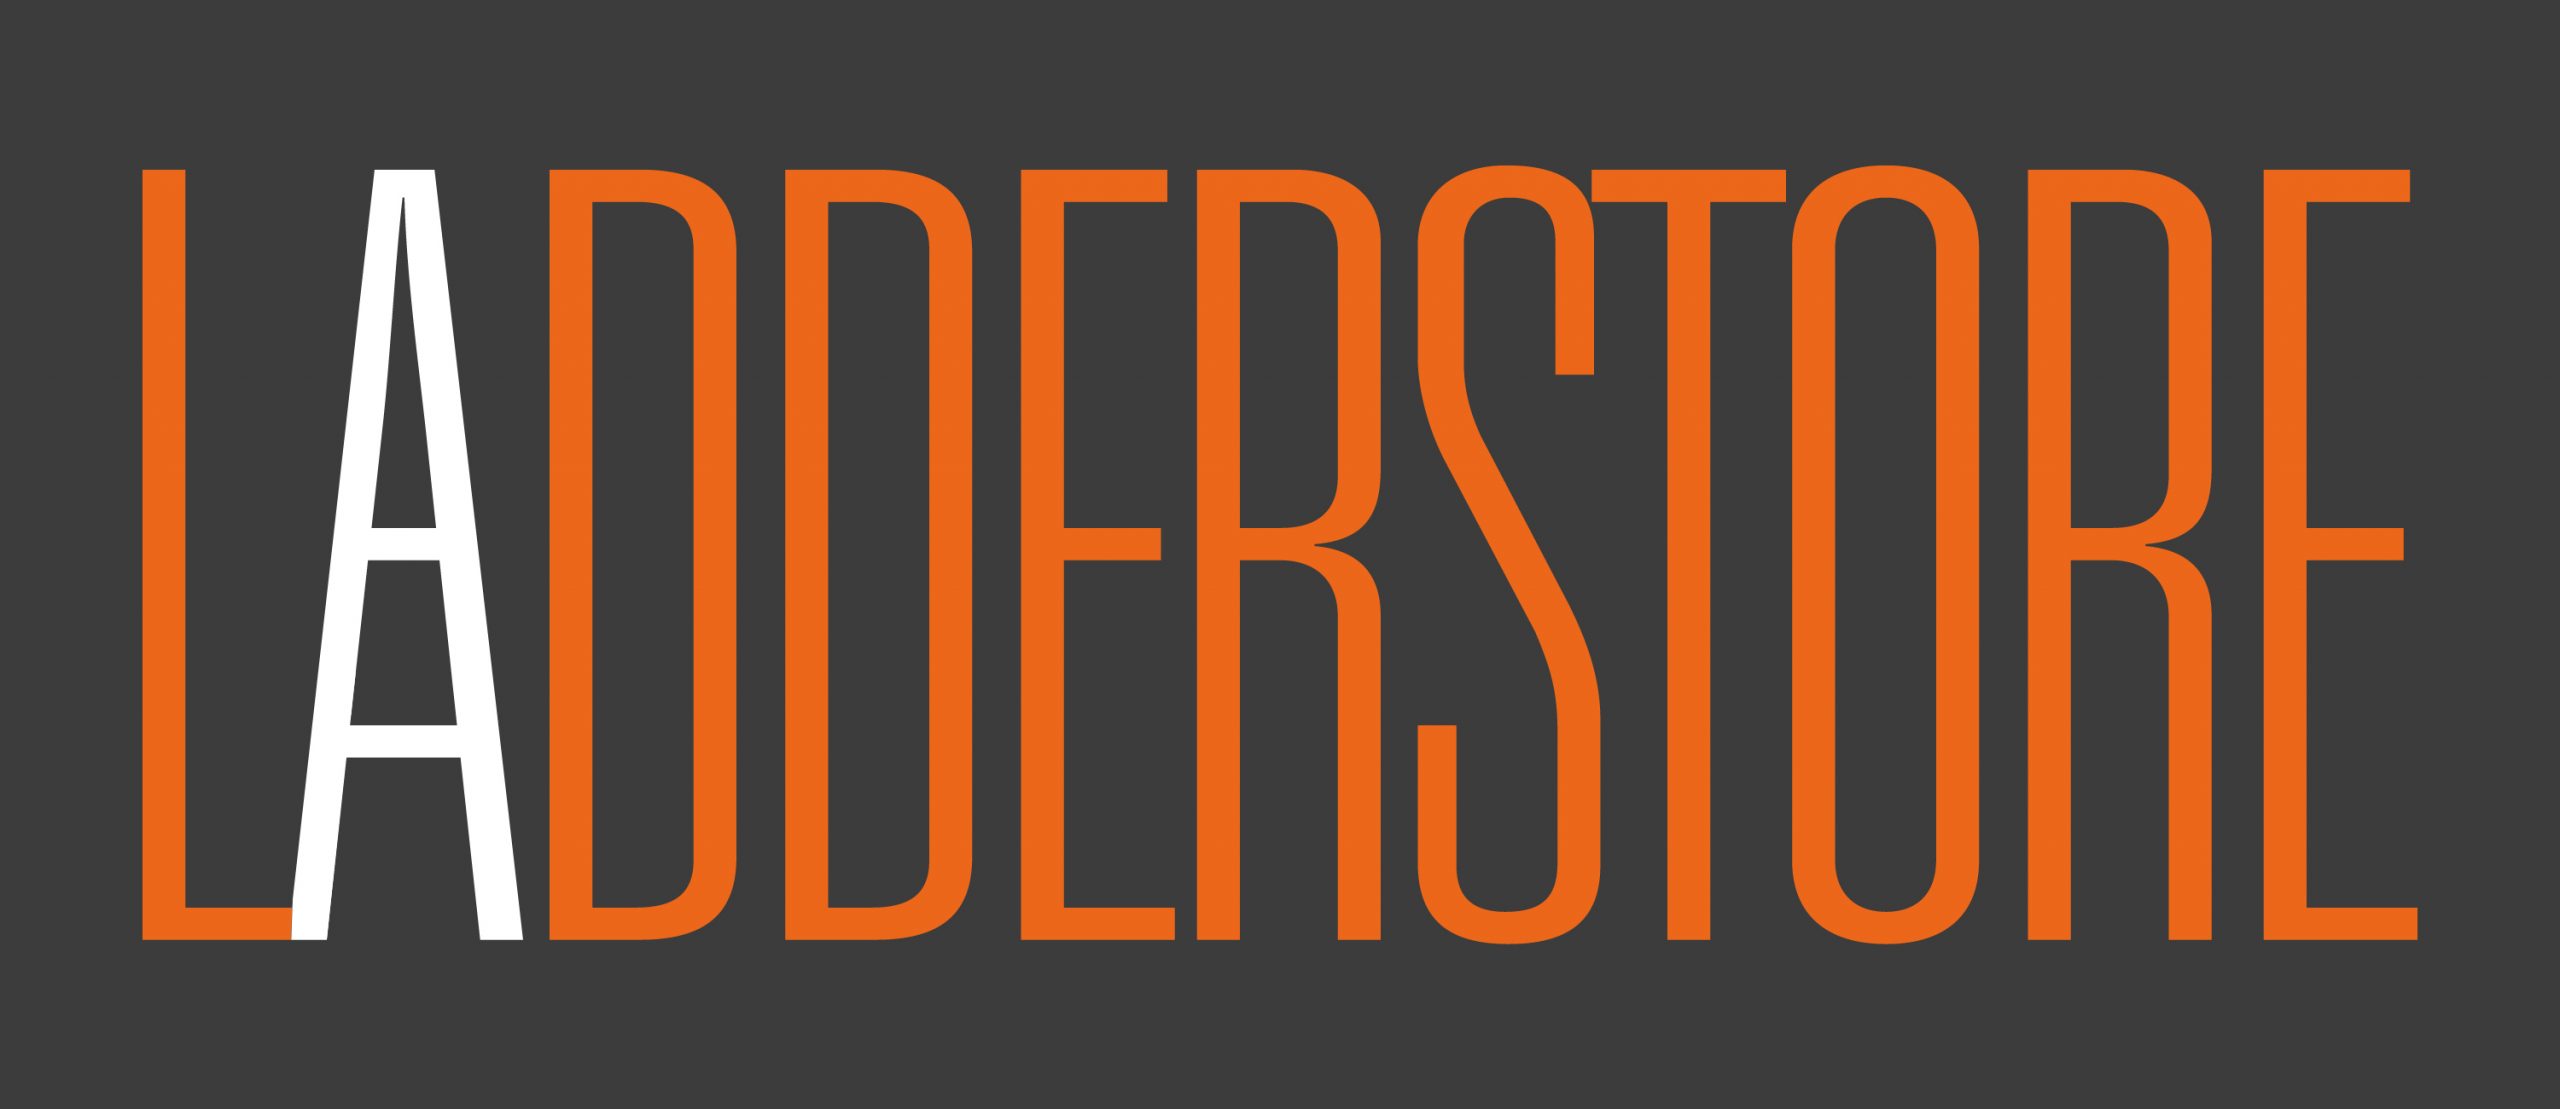 Ladderstore Logo